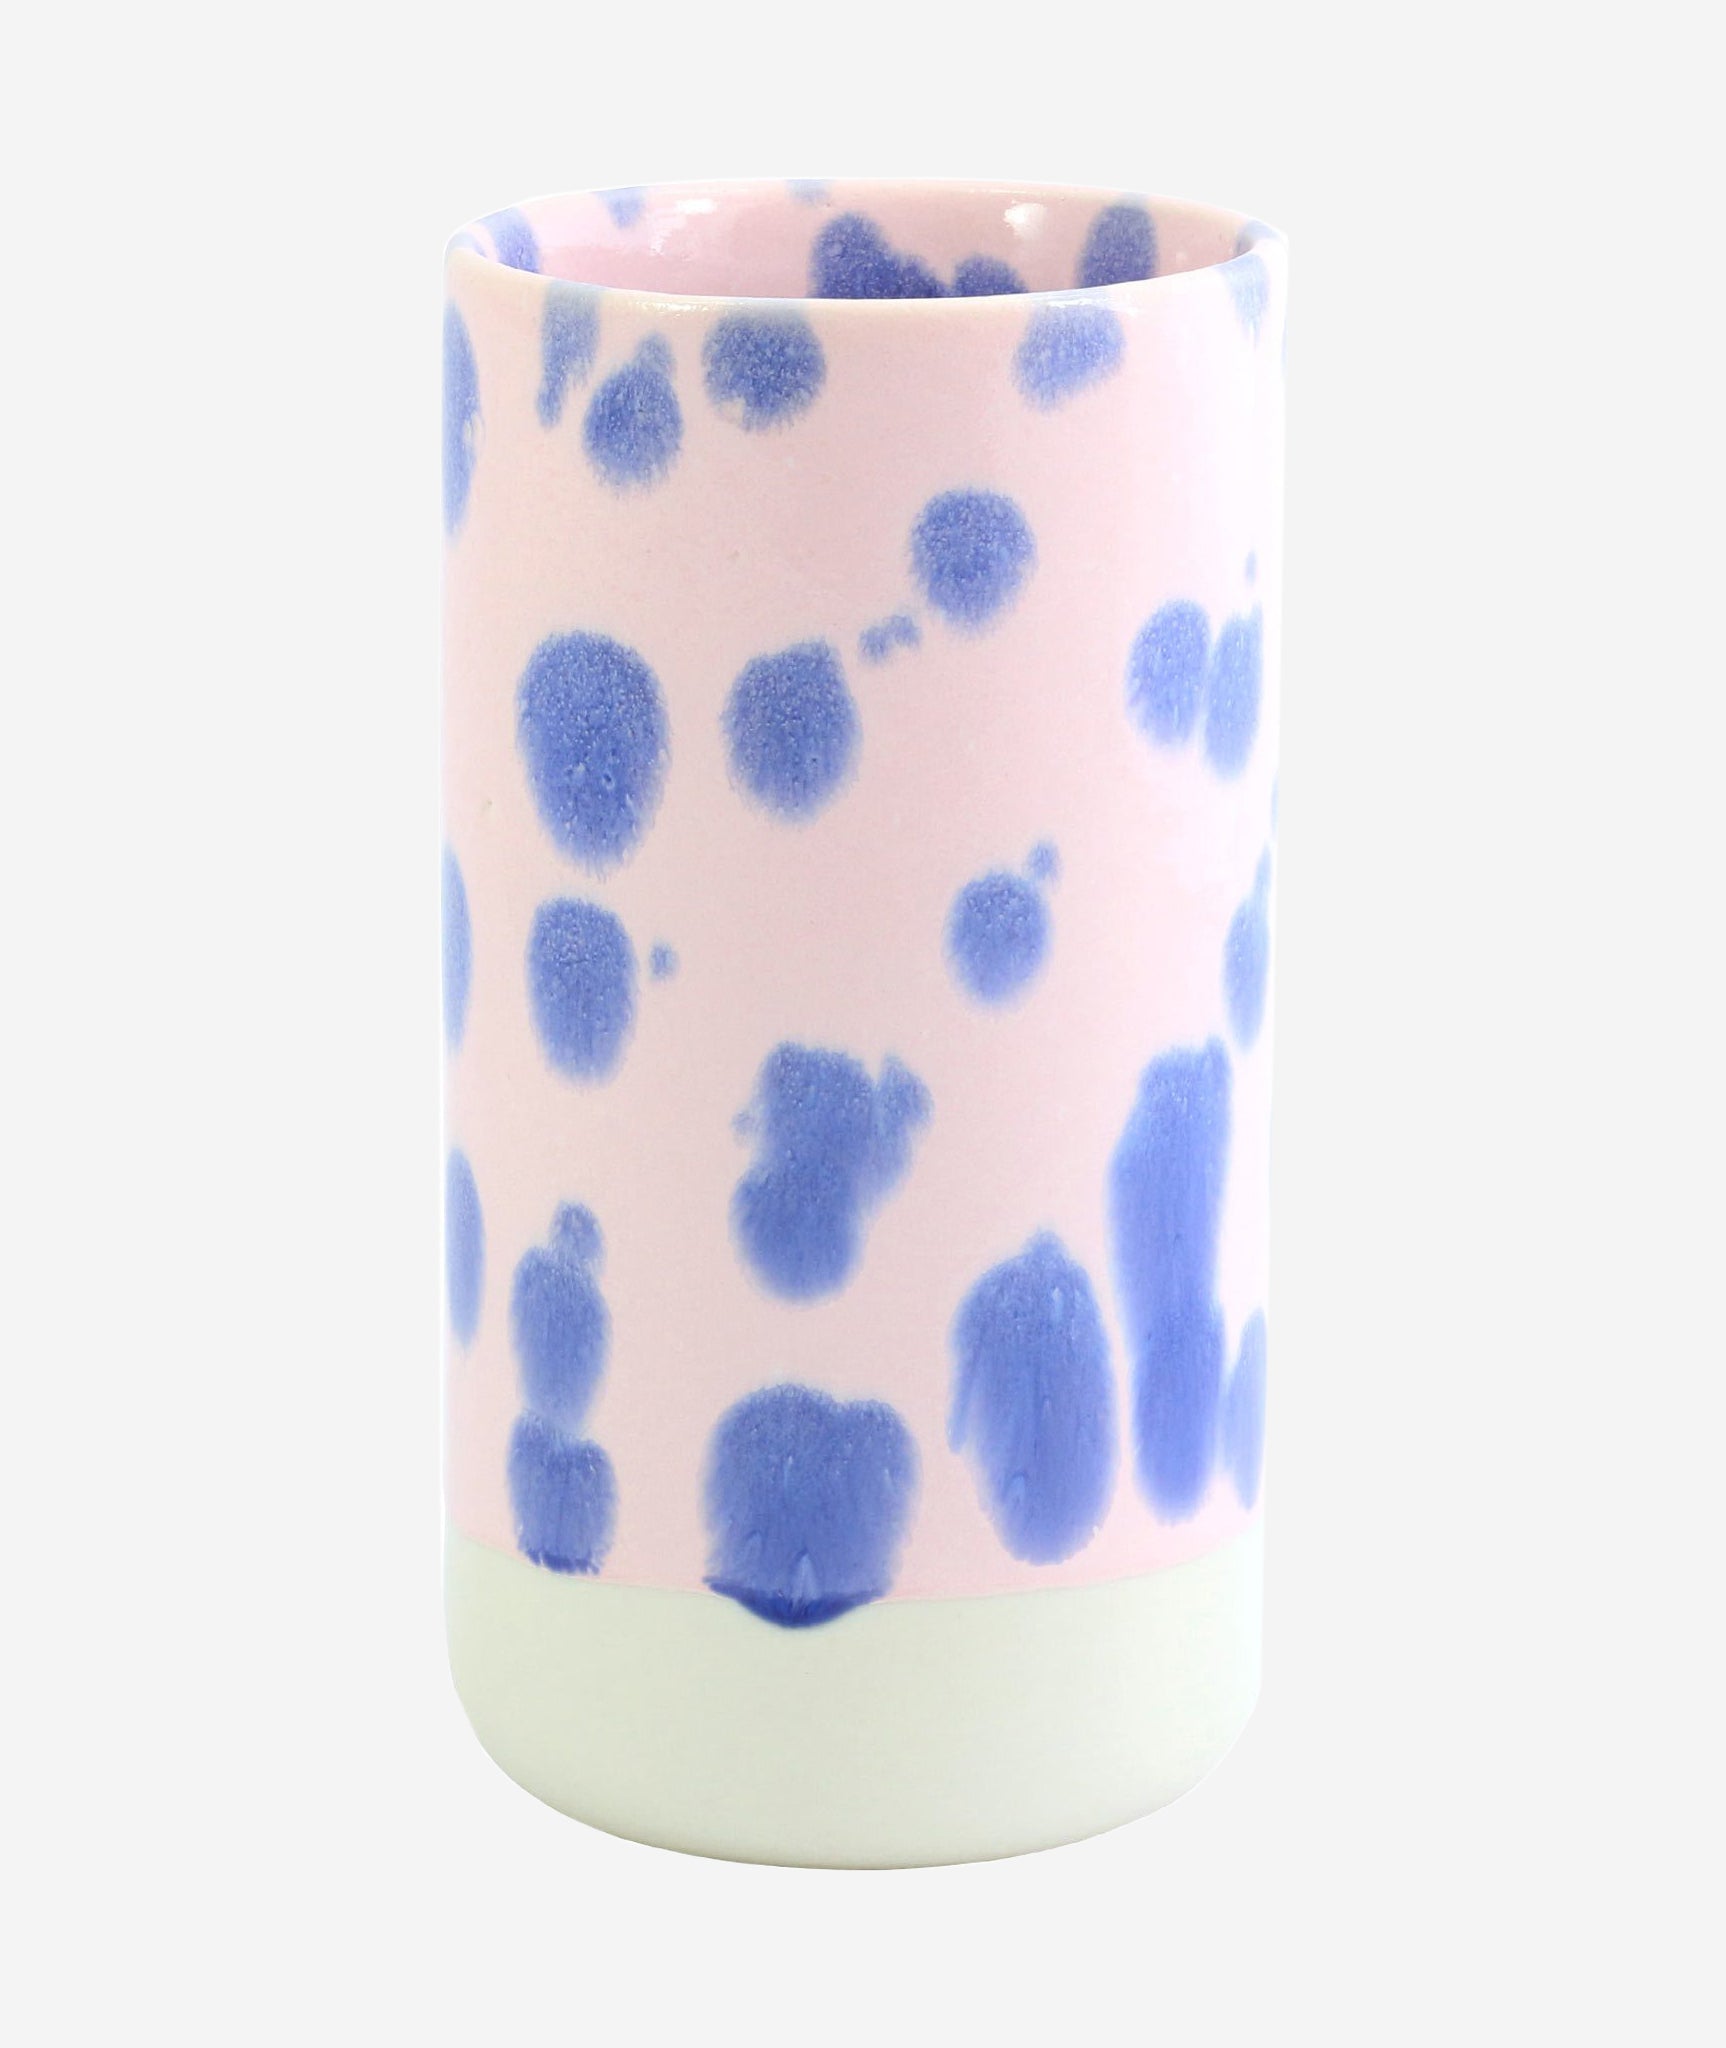 Stash Jar - More Colors Studio Arhoj - BEAM // Design Store